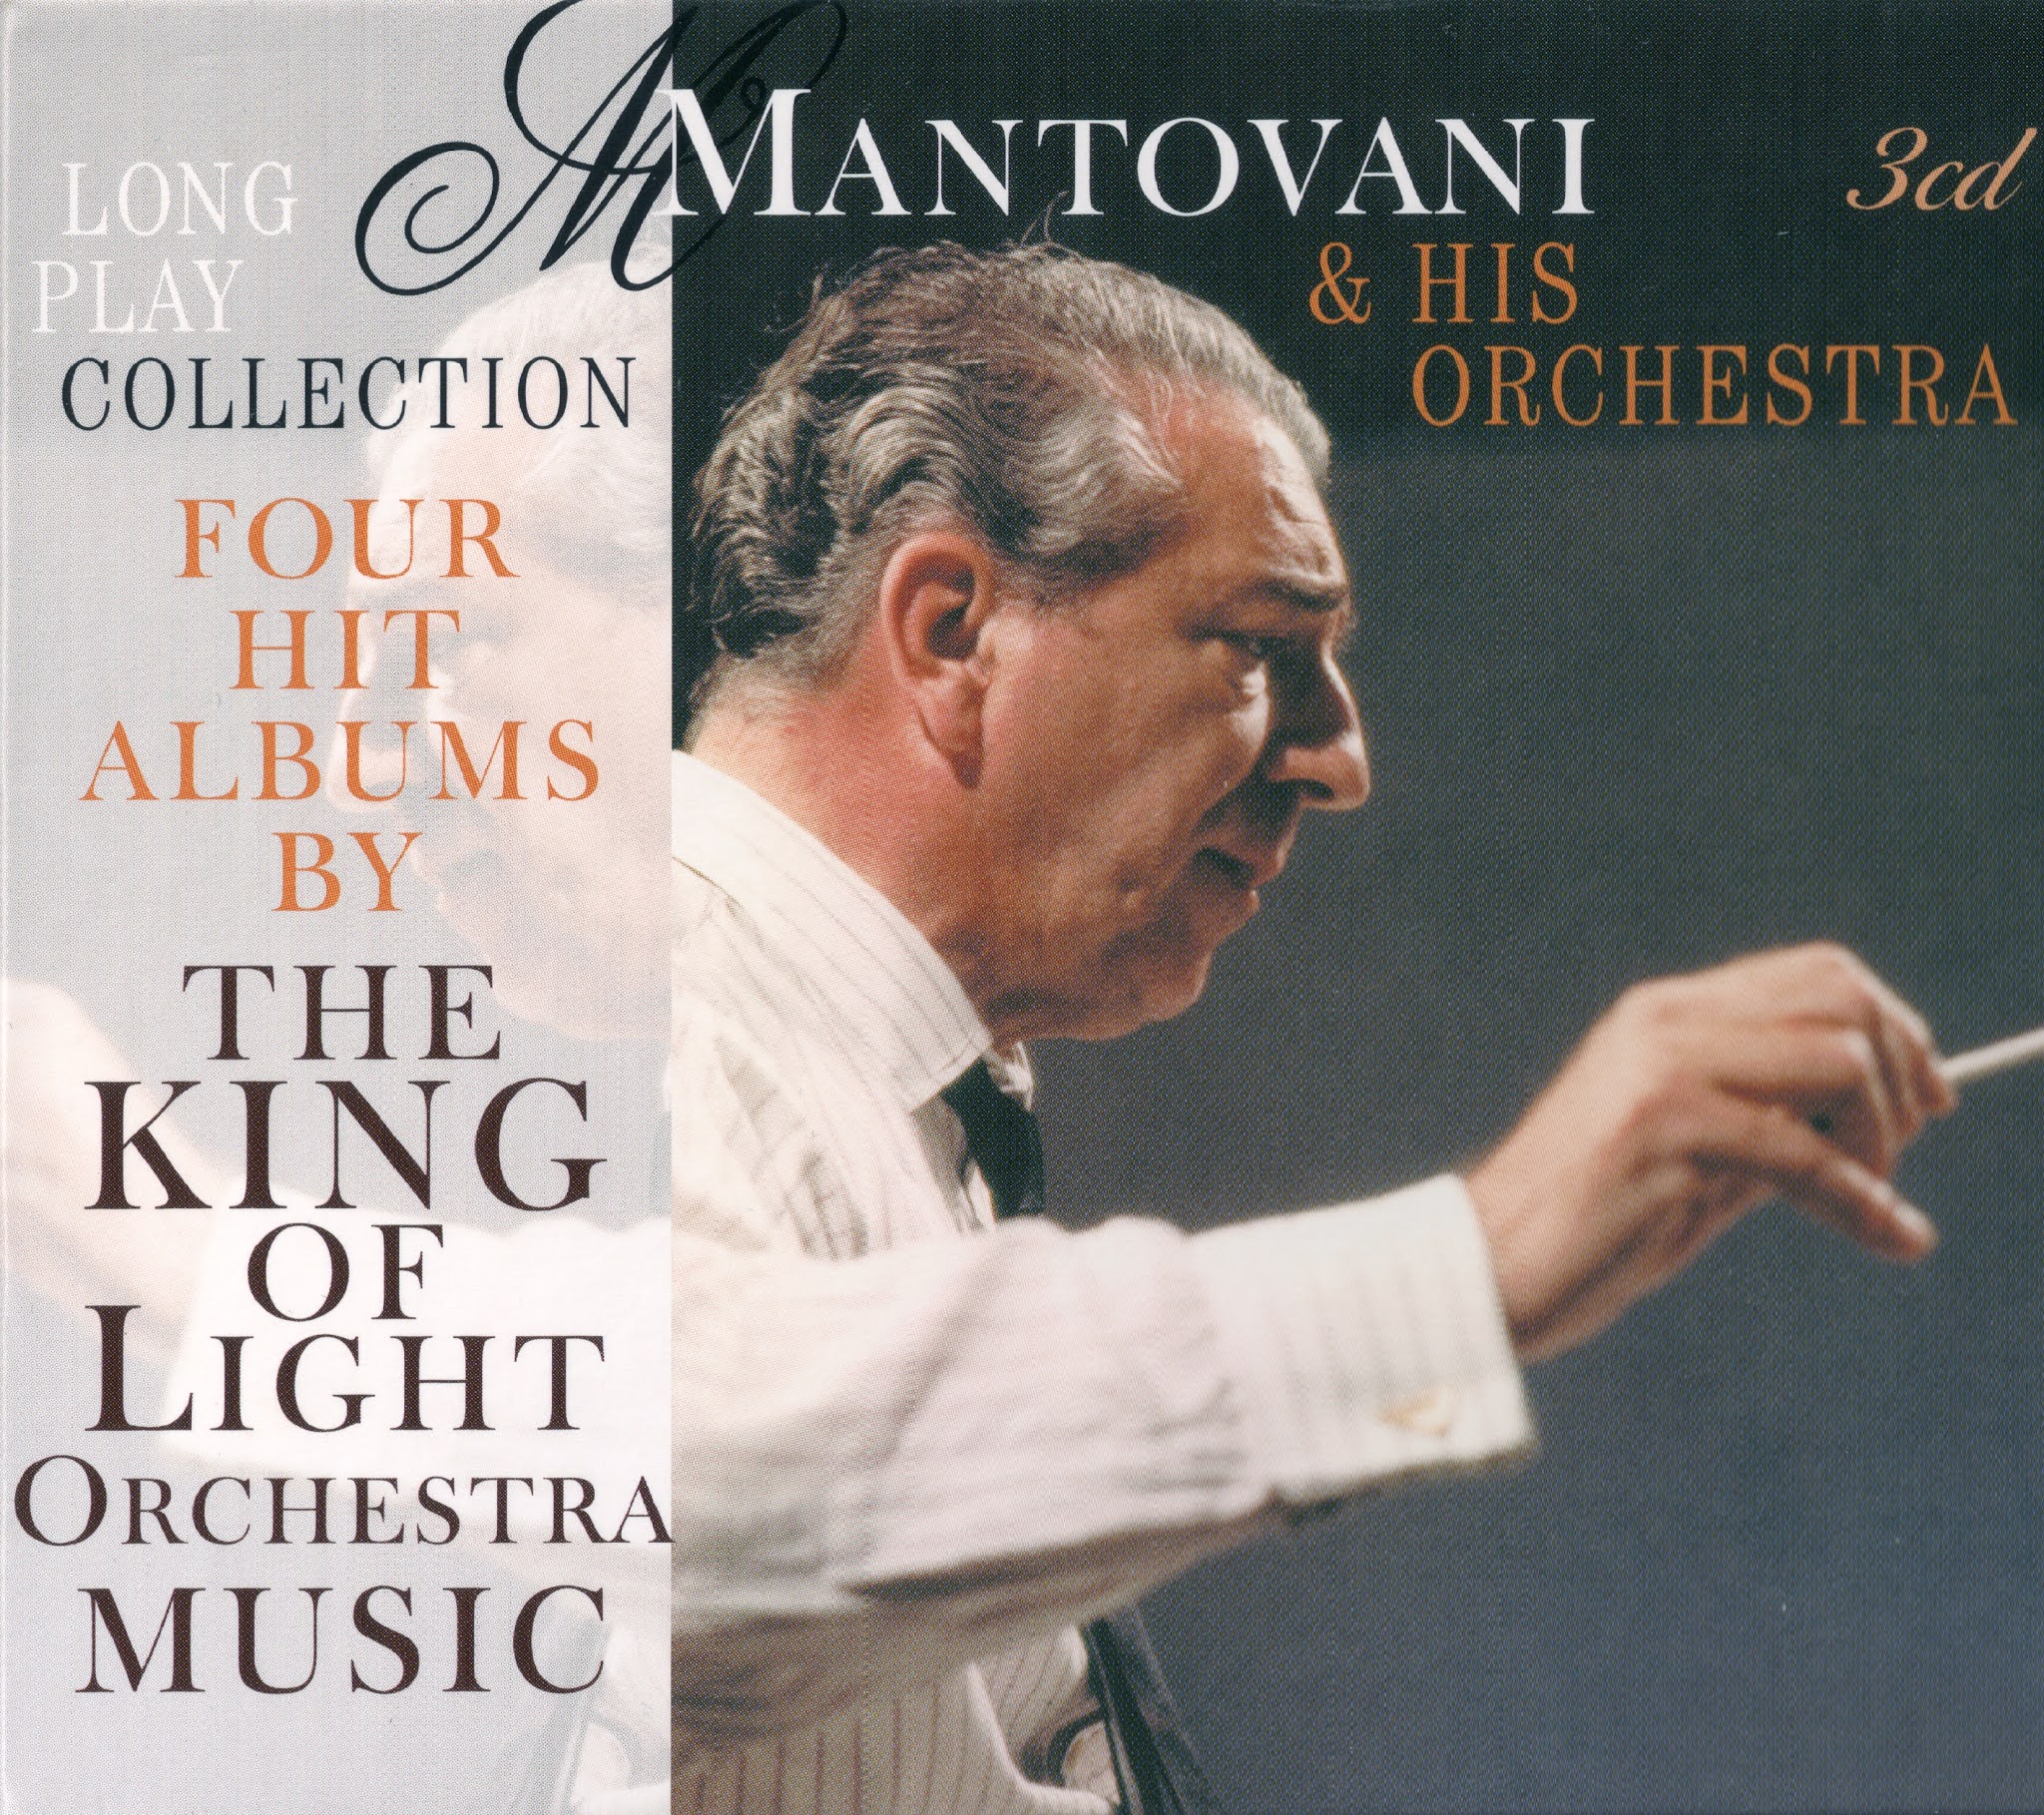 Mantovani & his Orchestra фото. Mantovani - Collector’s Mantovani Volume 1. Mantovani - Collector’s Mantovani Volume 2 - 2002. Re discover Mantovani. Orchestra collection